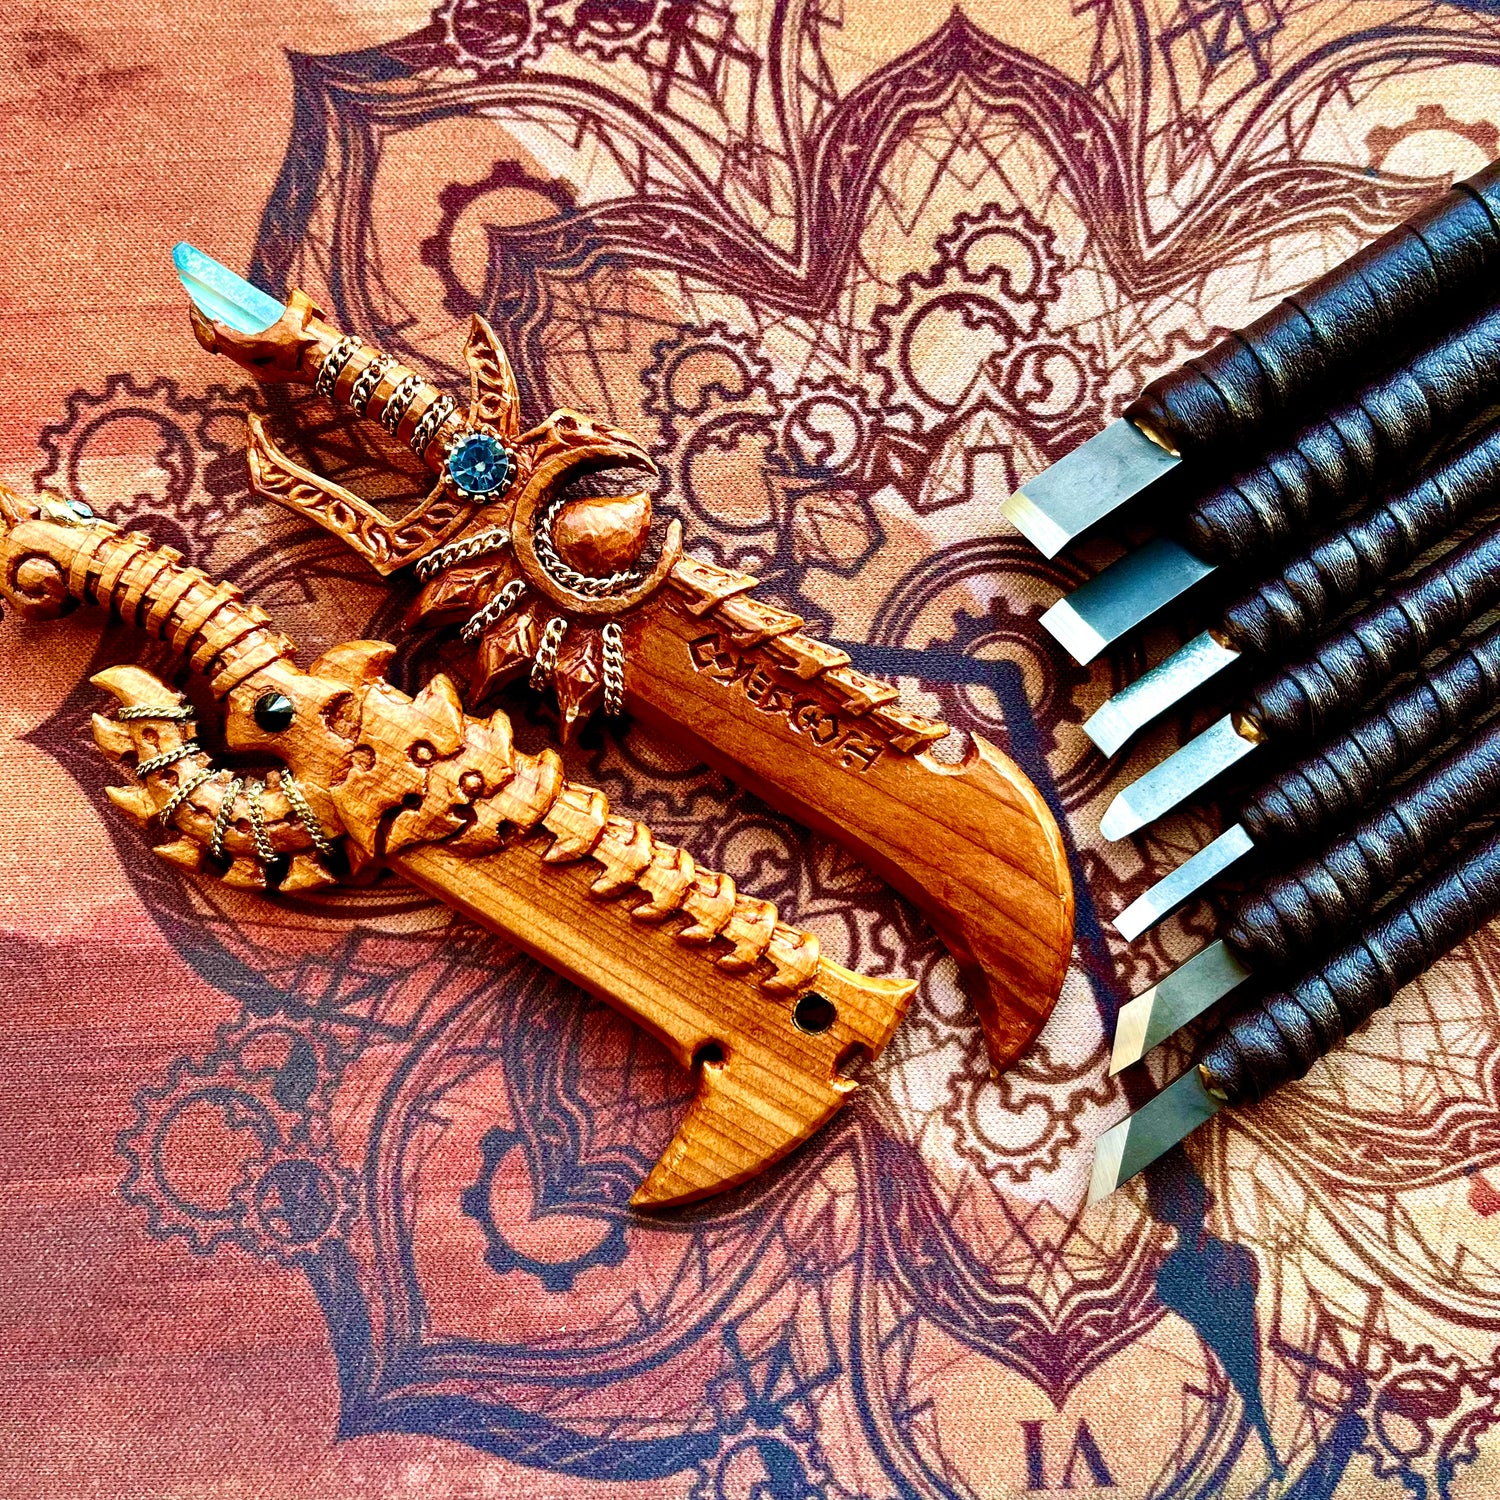 fantasy swords wood carving